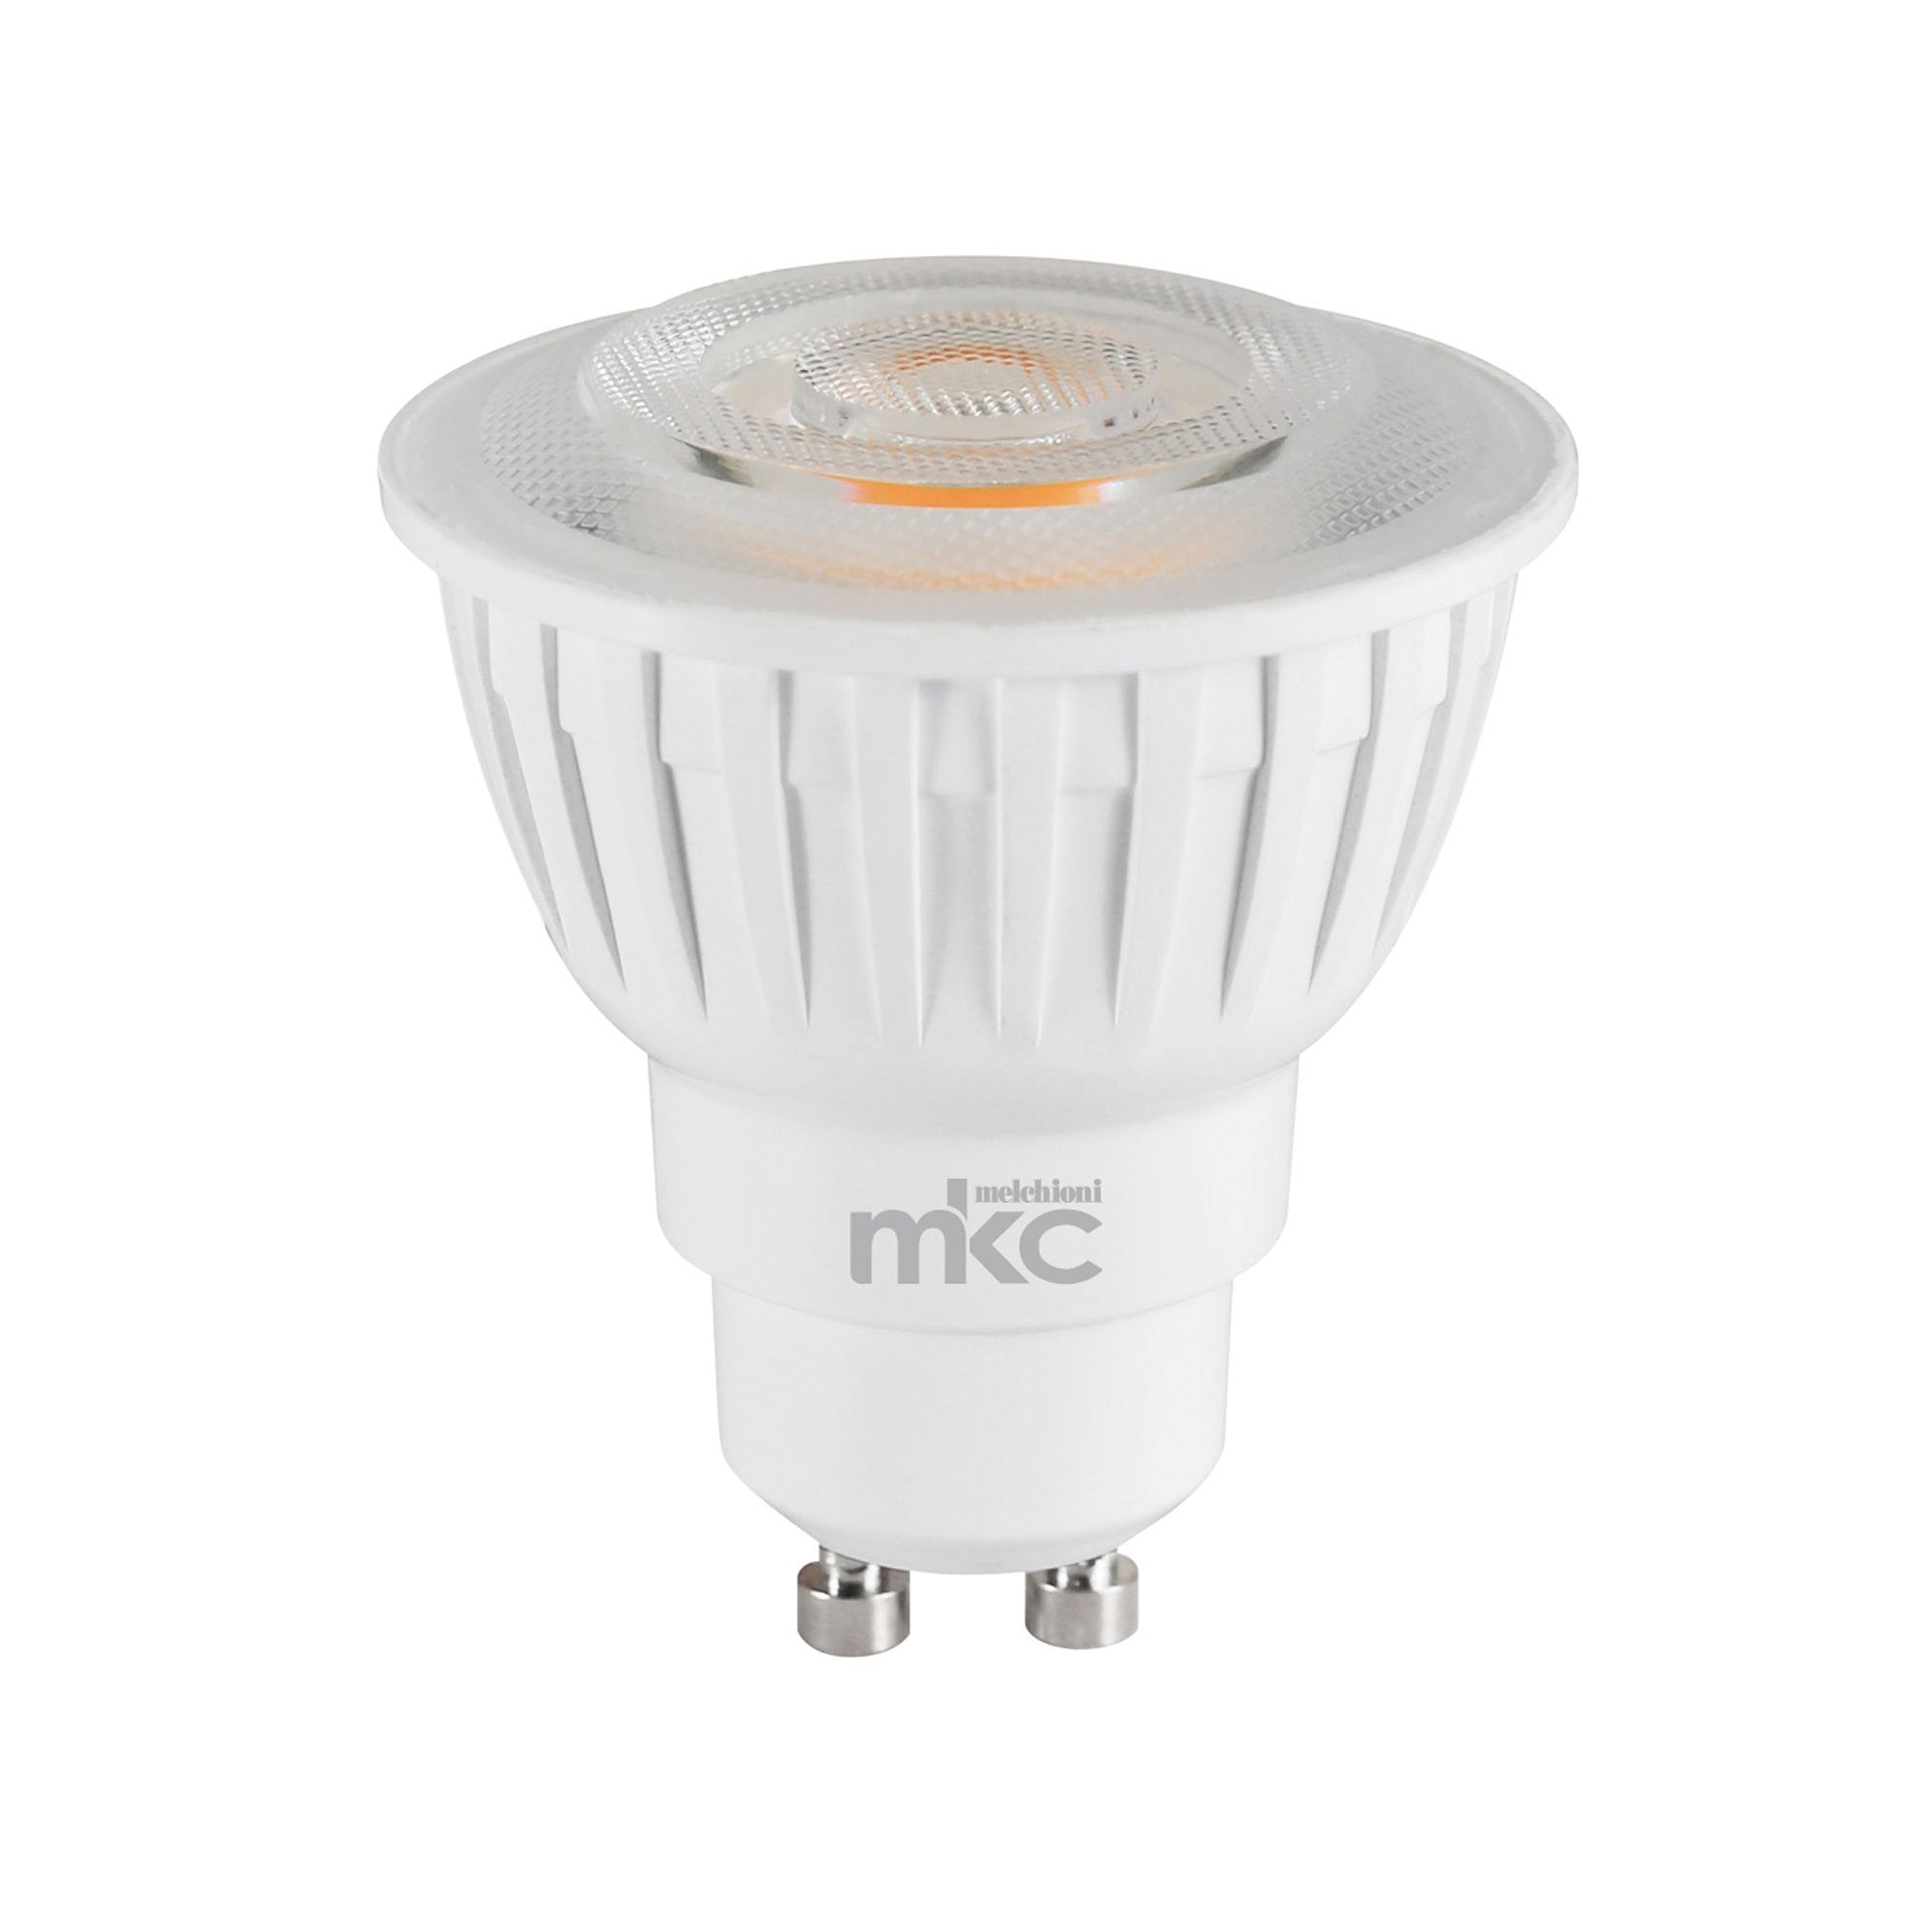 mkc-lampada-led-mr-gu10-7-5w-gu10-2700k-luce-bianca-calda